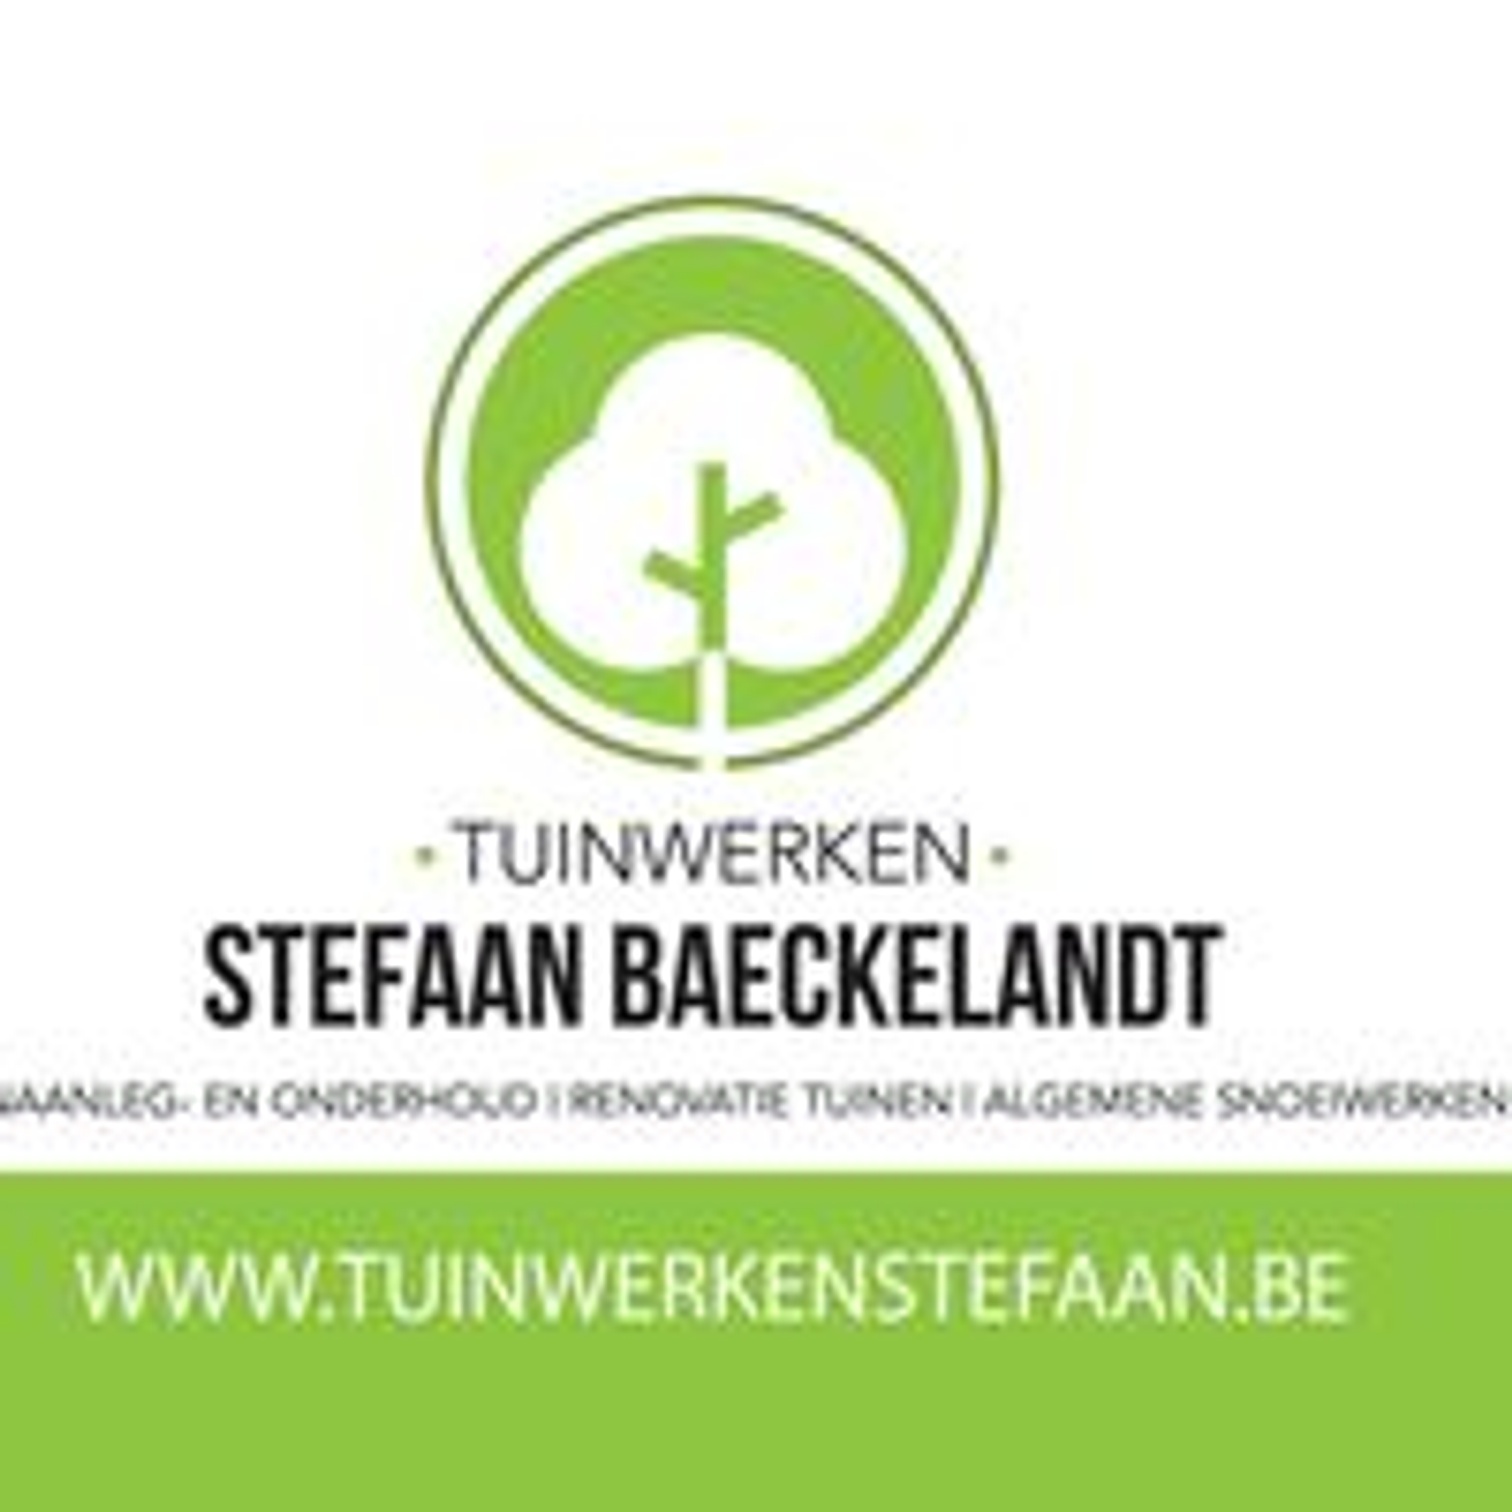 Tuinwerken Stefaan Baeckelandt logo